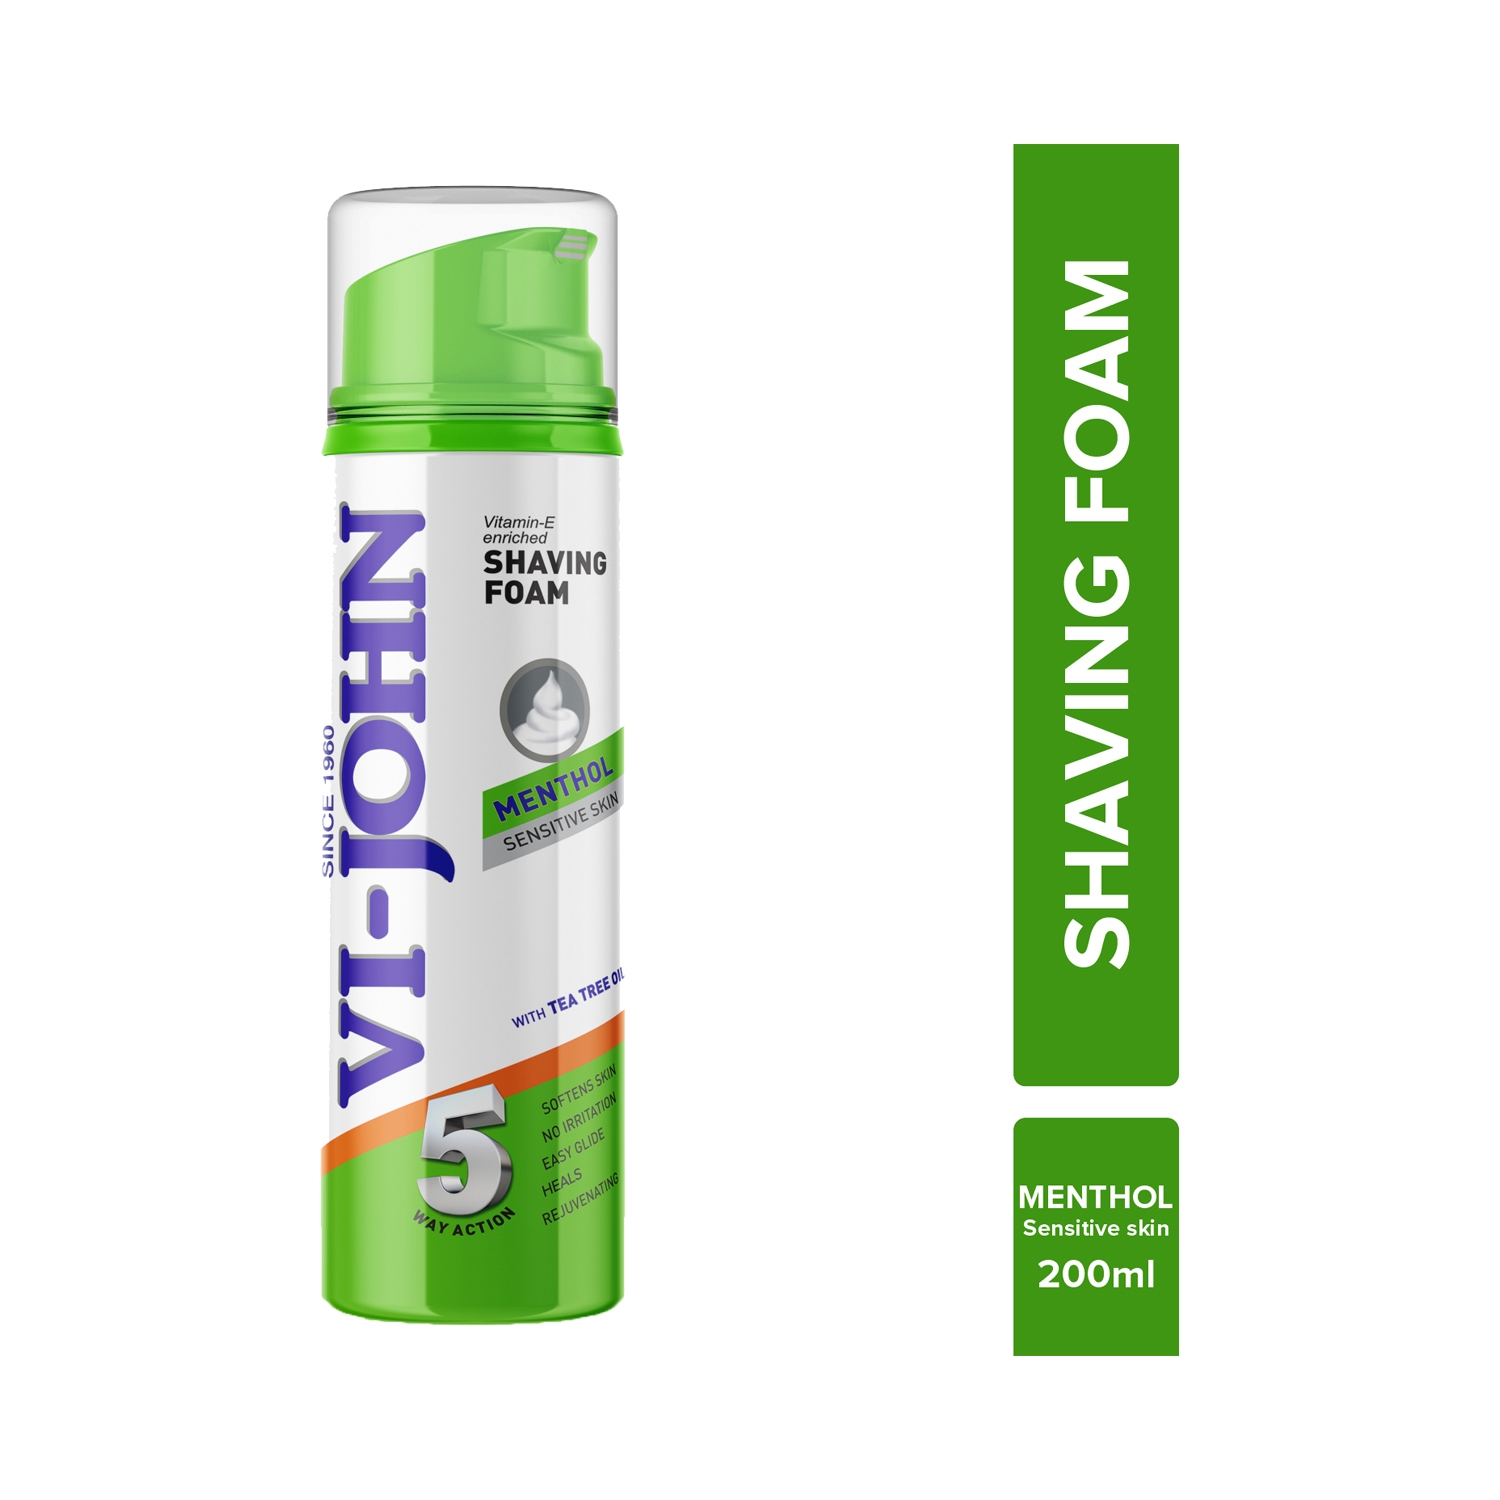 VI-JOHN 5 Way Action Shaving Foam Enriched With Vitamin E & Menthol For Sensitive Skin (200ml)